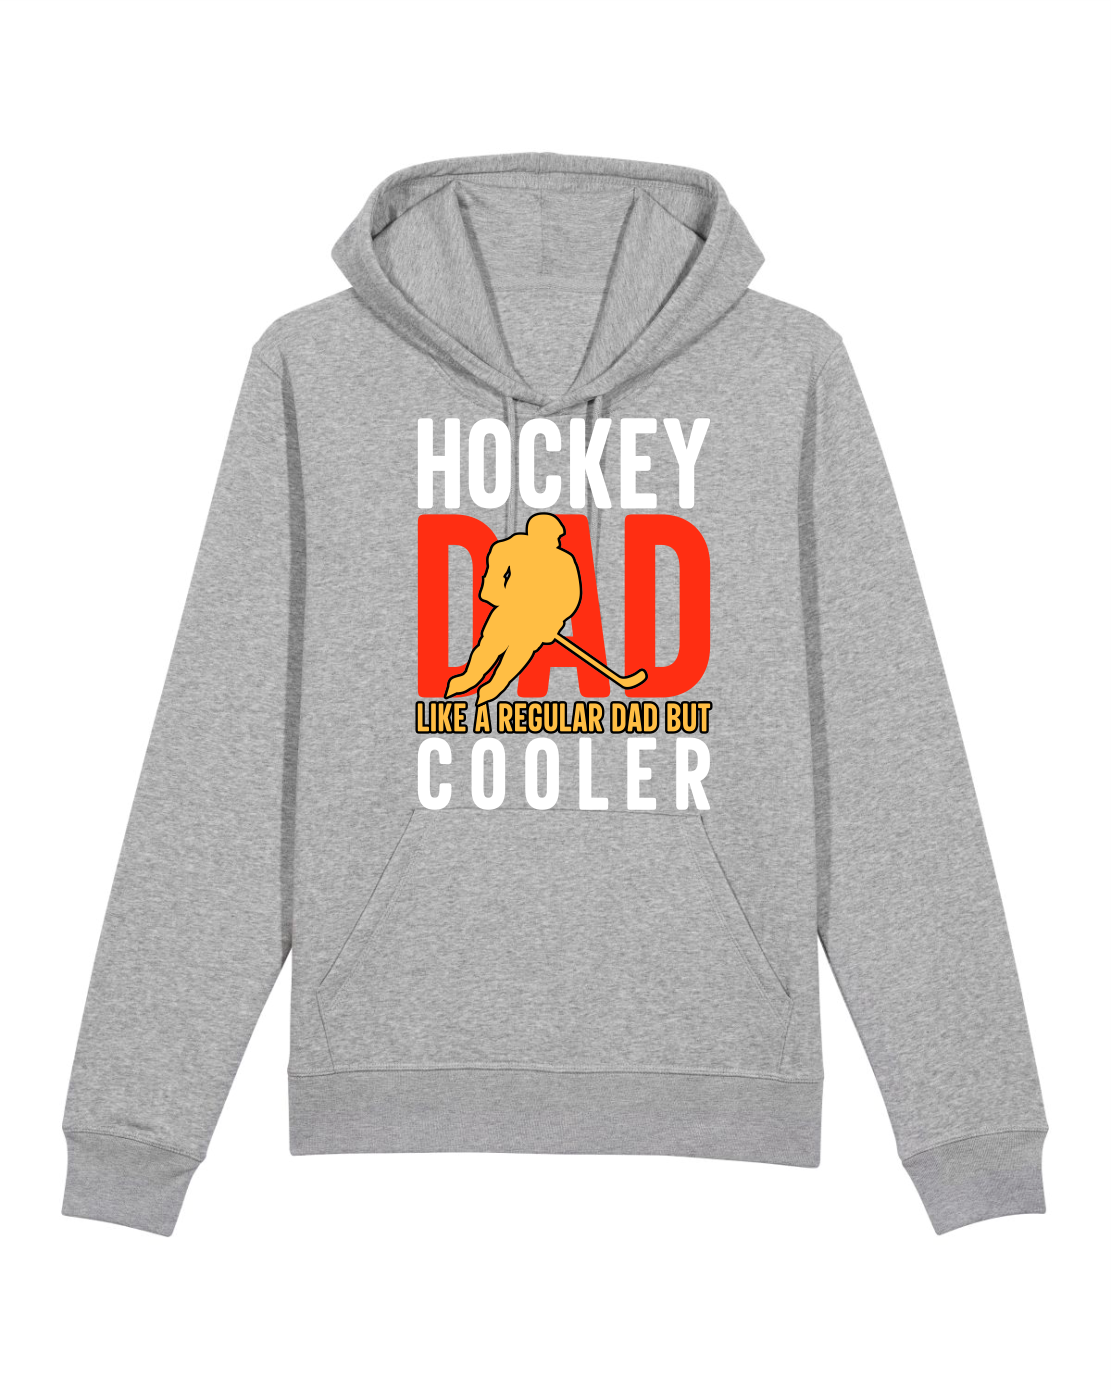 Hockey Dad Hoddy Basic Unisex  